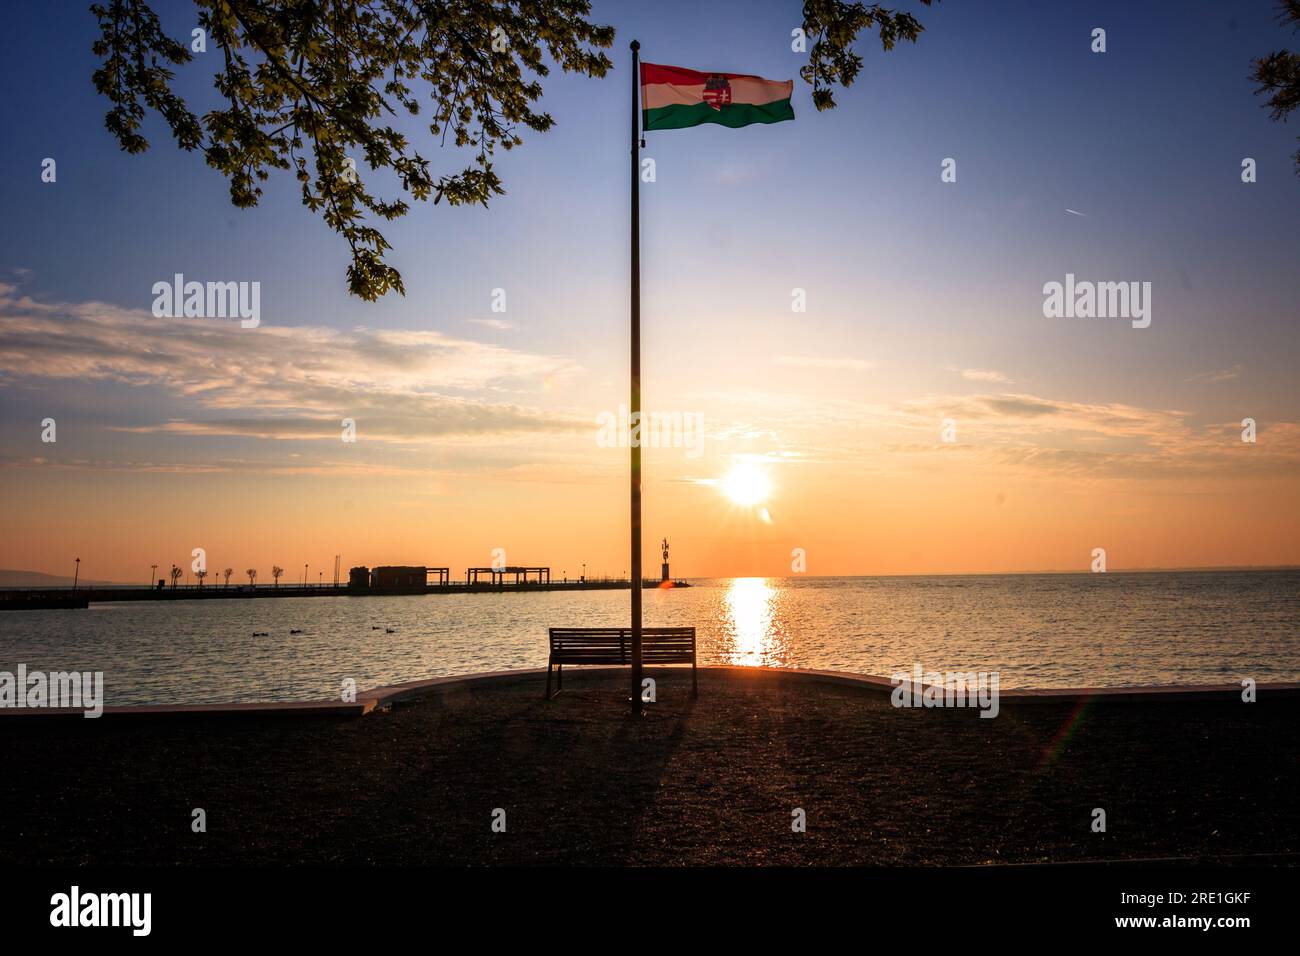 Enchanting Sunrise at Lake Balaton, Hungary - Capturing the Scenic Beauty Stock Photo